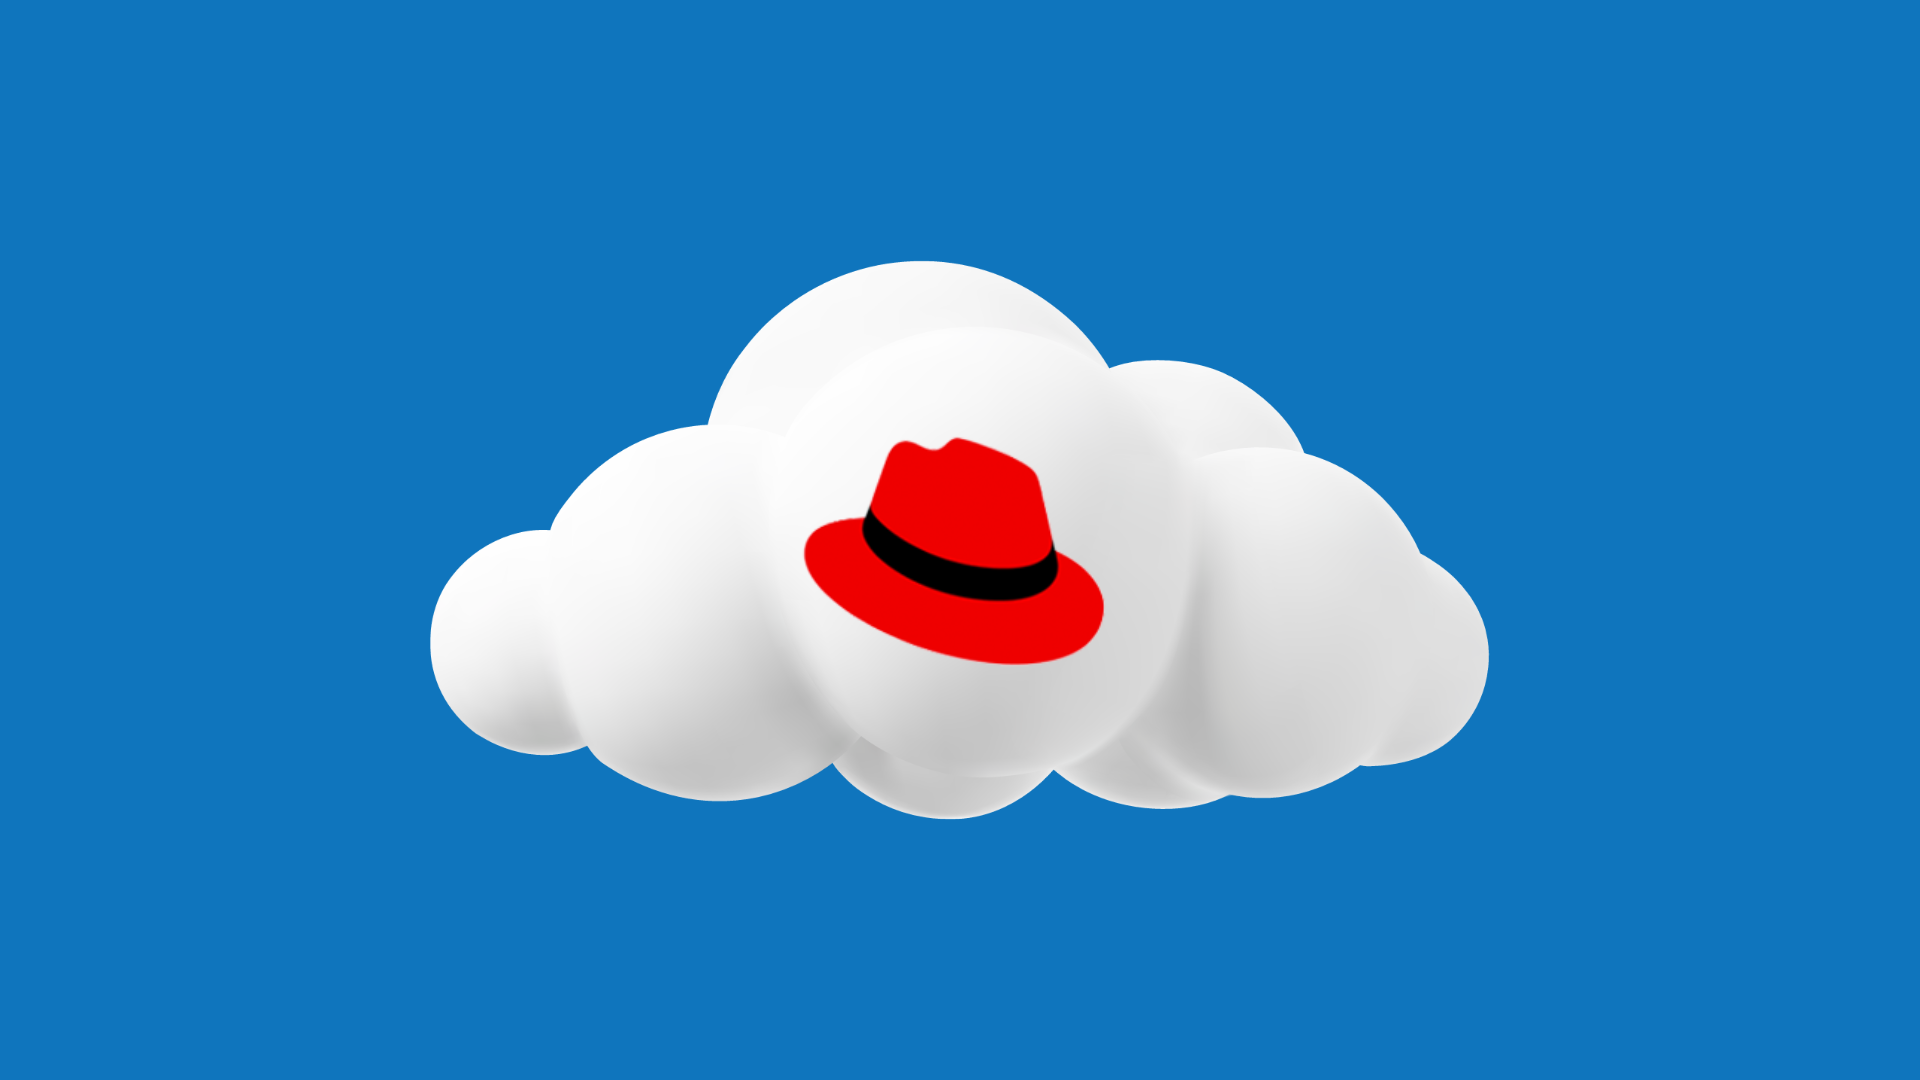 Azure Red Hat OpenShift: Asegura tus Cargas de Trabajo